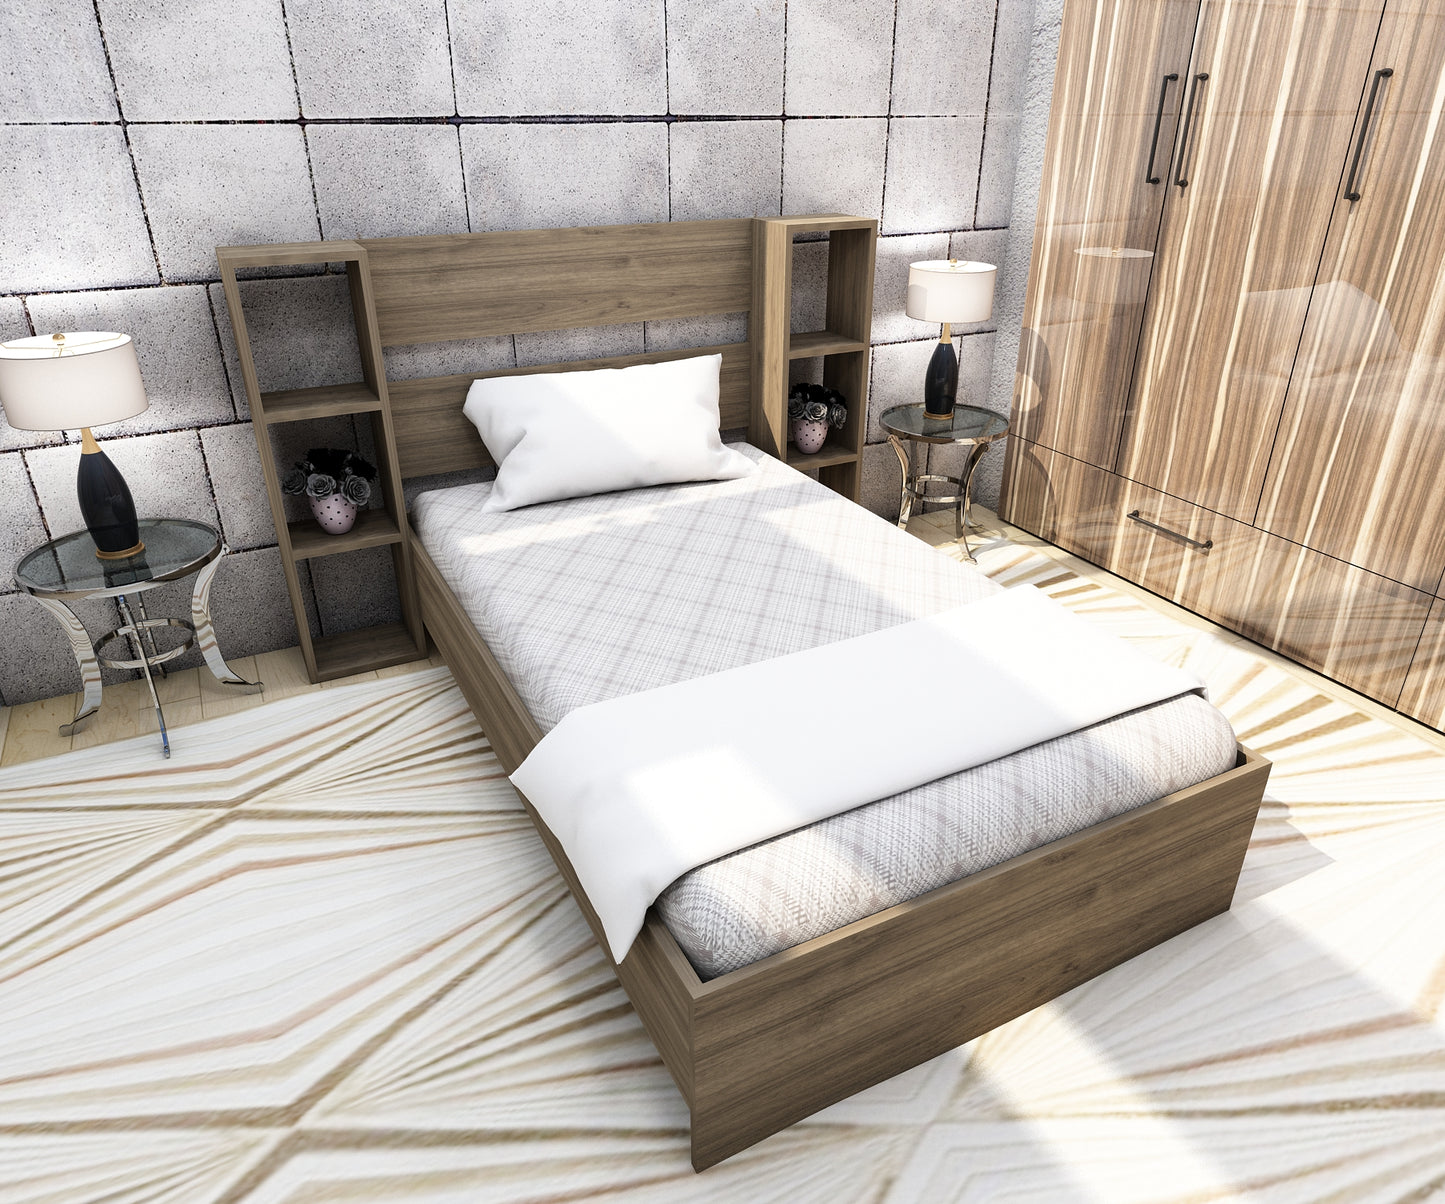 Bedstead Bed Frame with Metal Slats and Storage Shelves Erica